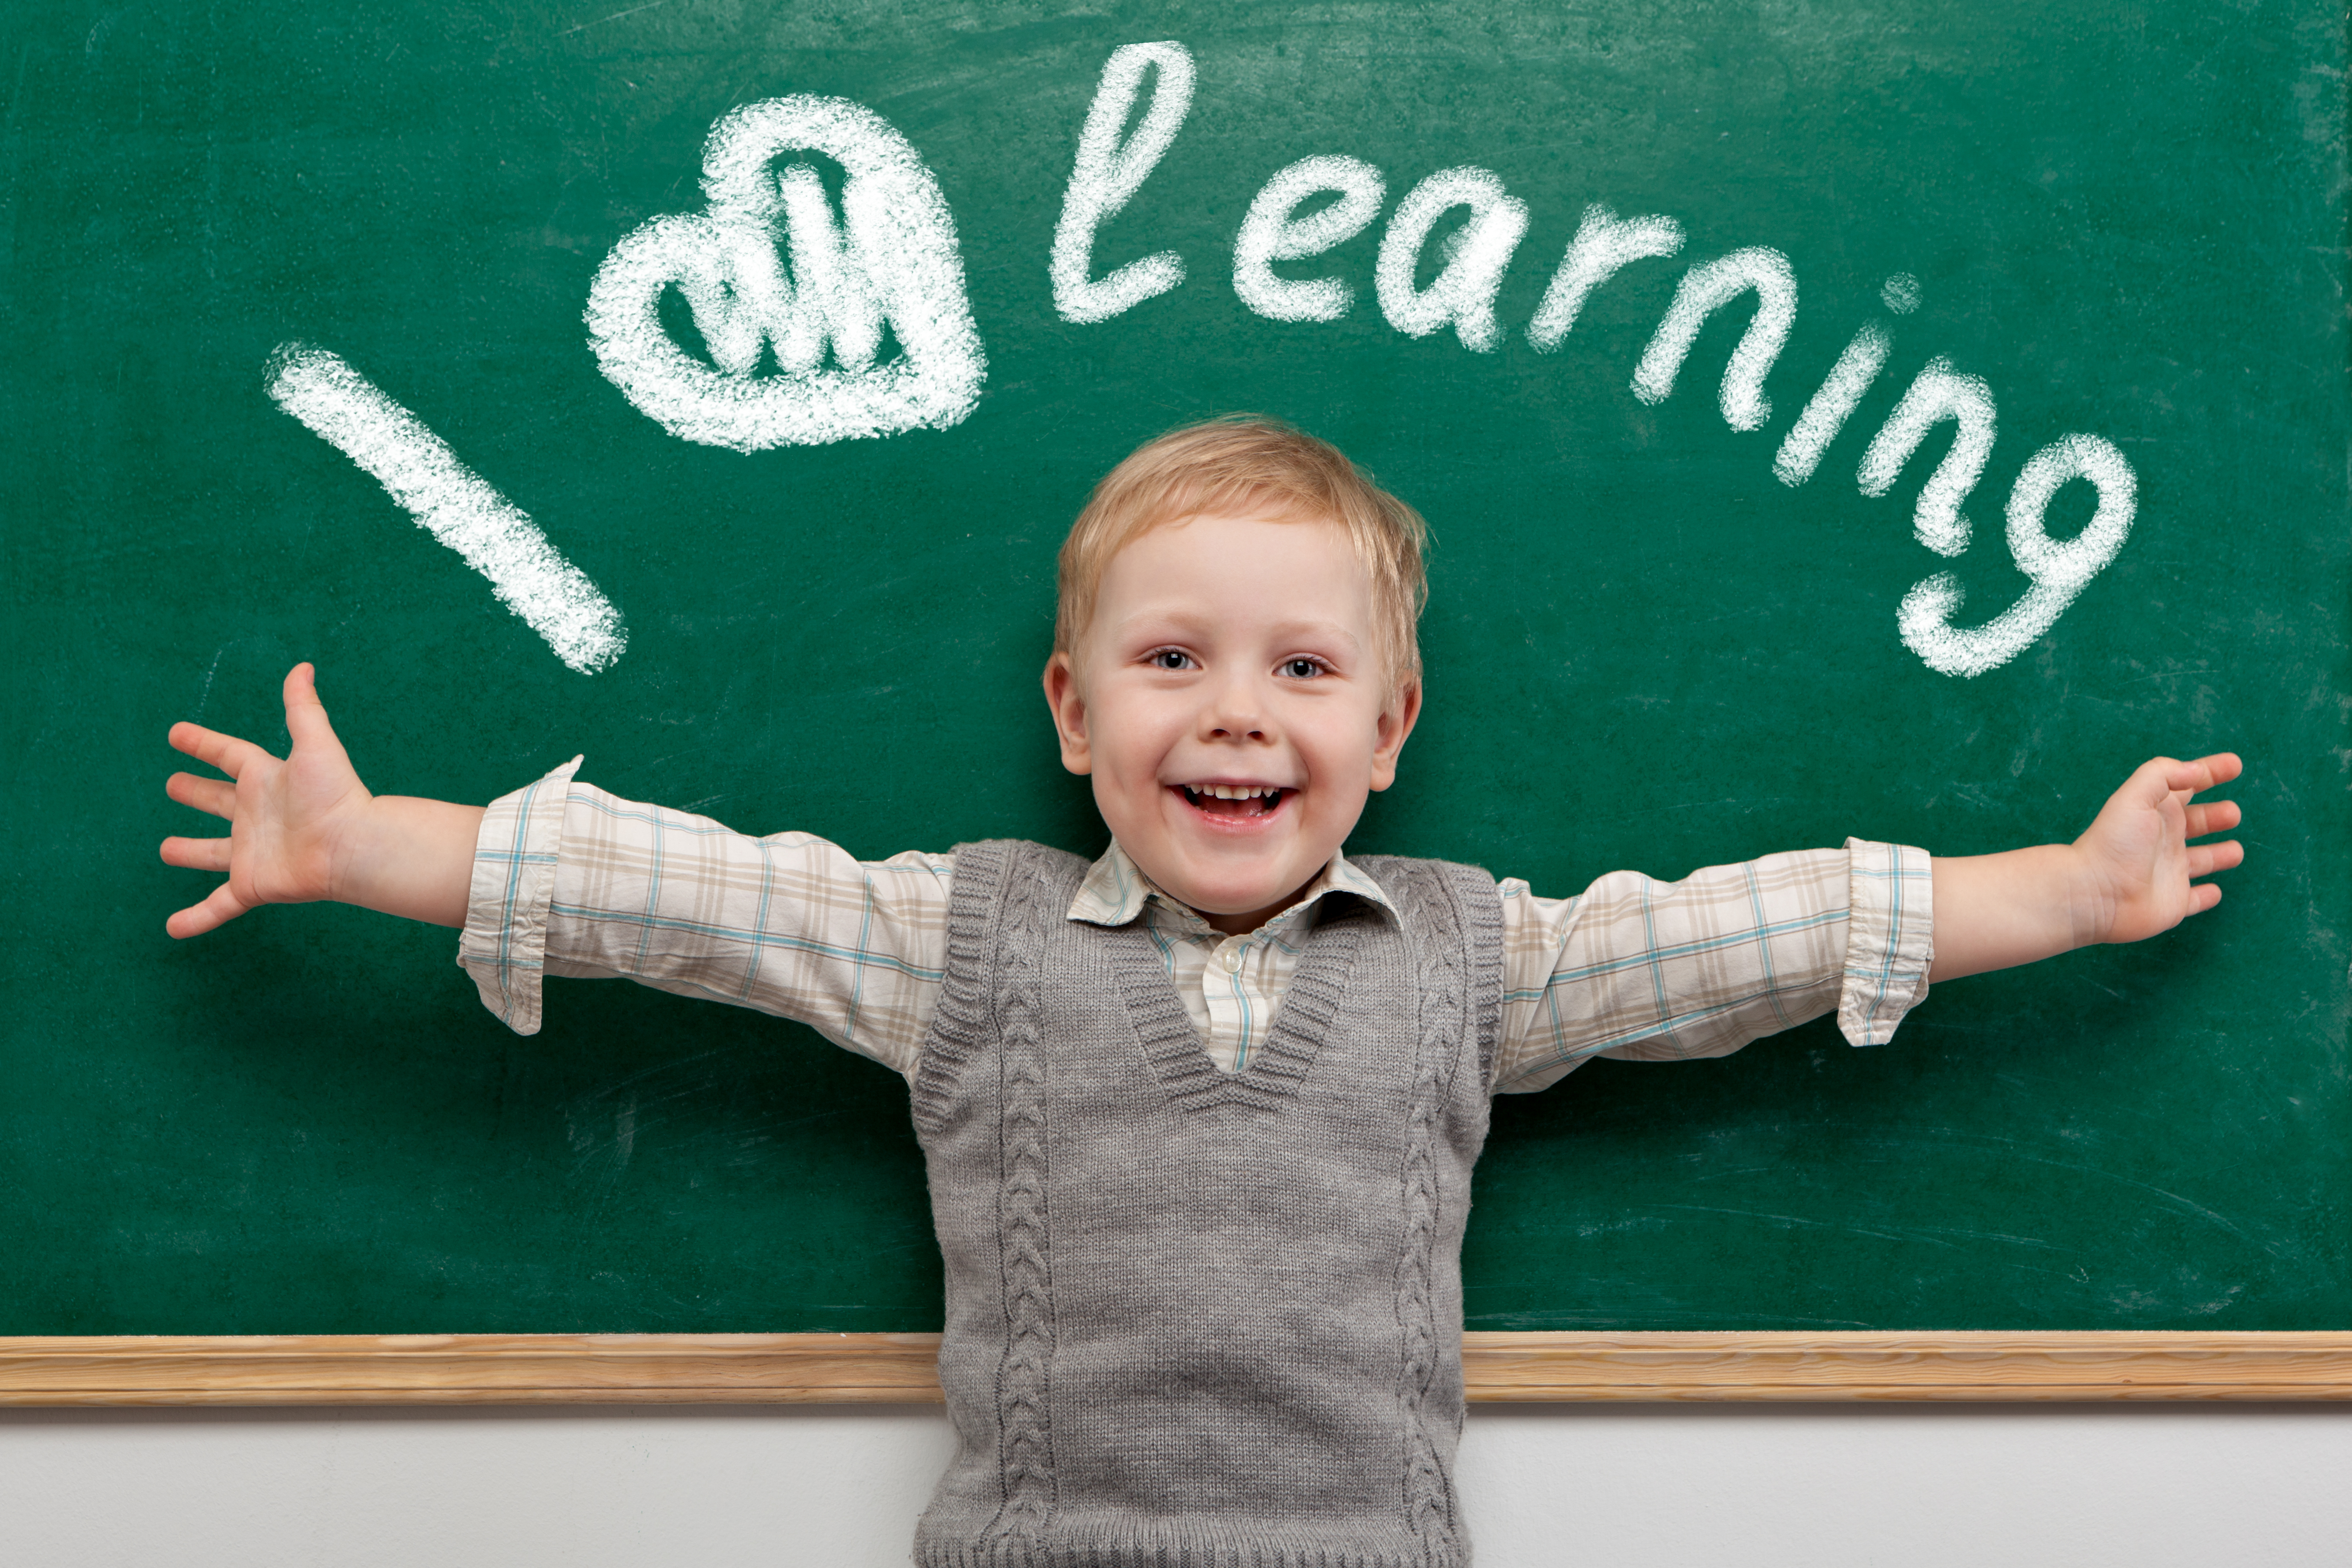 Achieve tutoring - I love learning